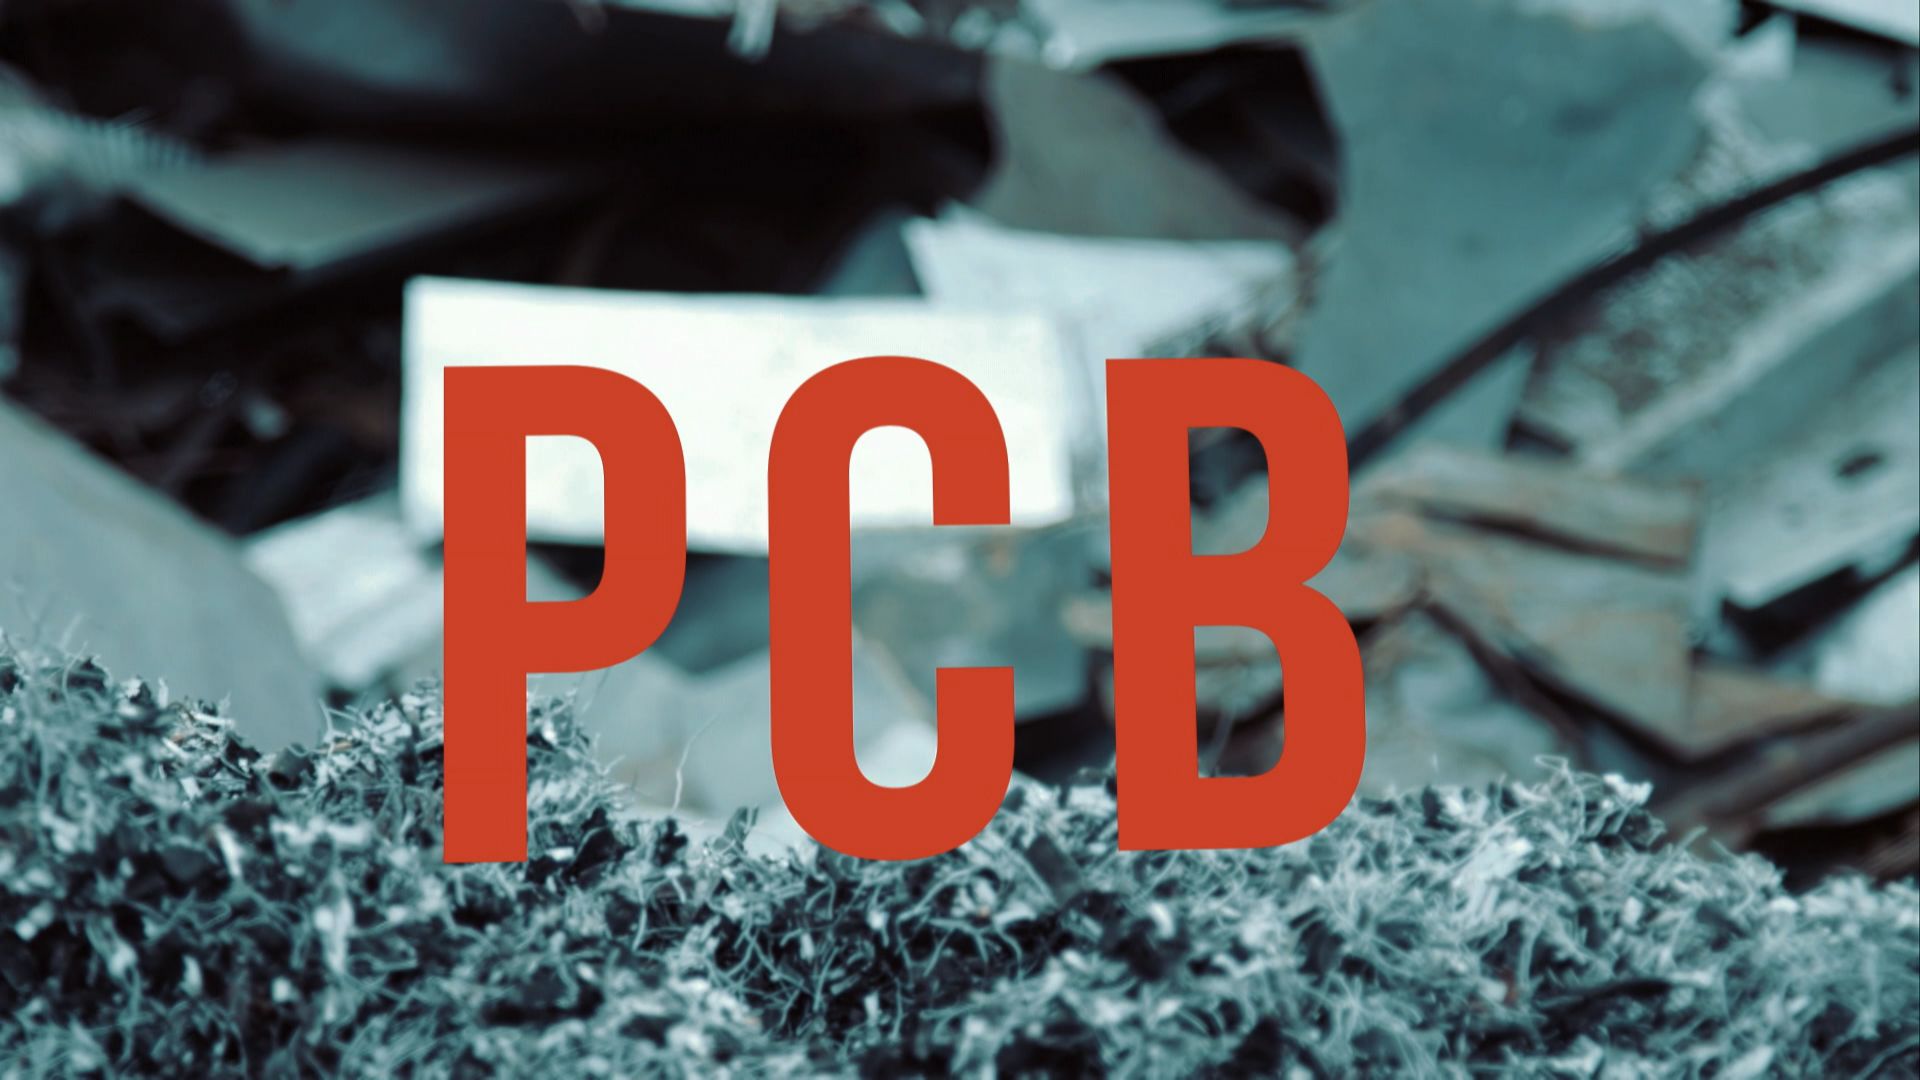 Les PCB sont des polluants organiques persistants.